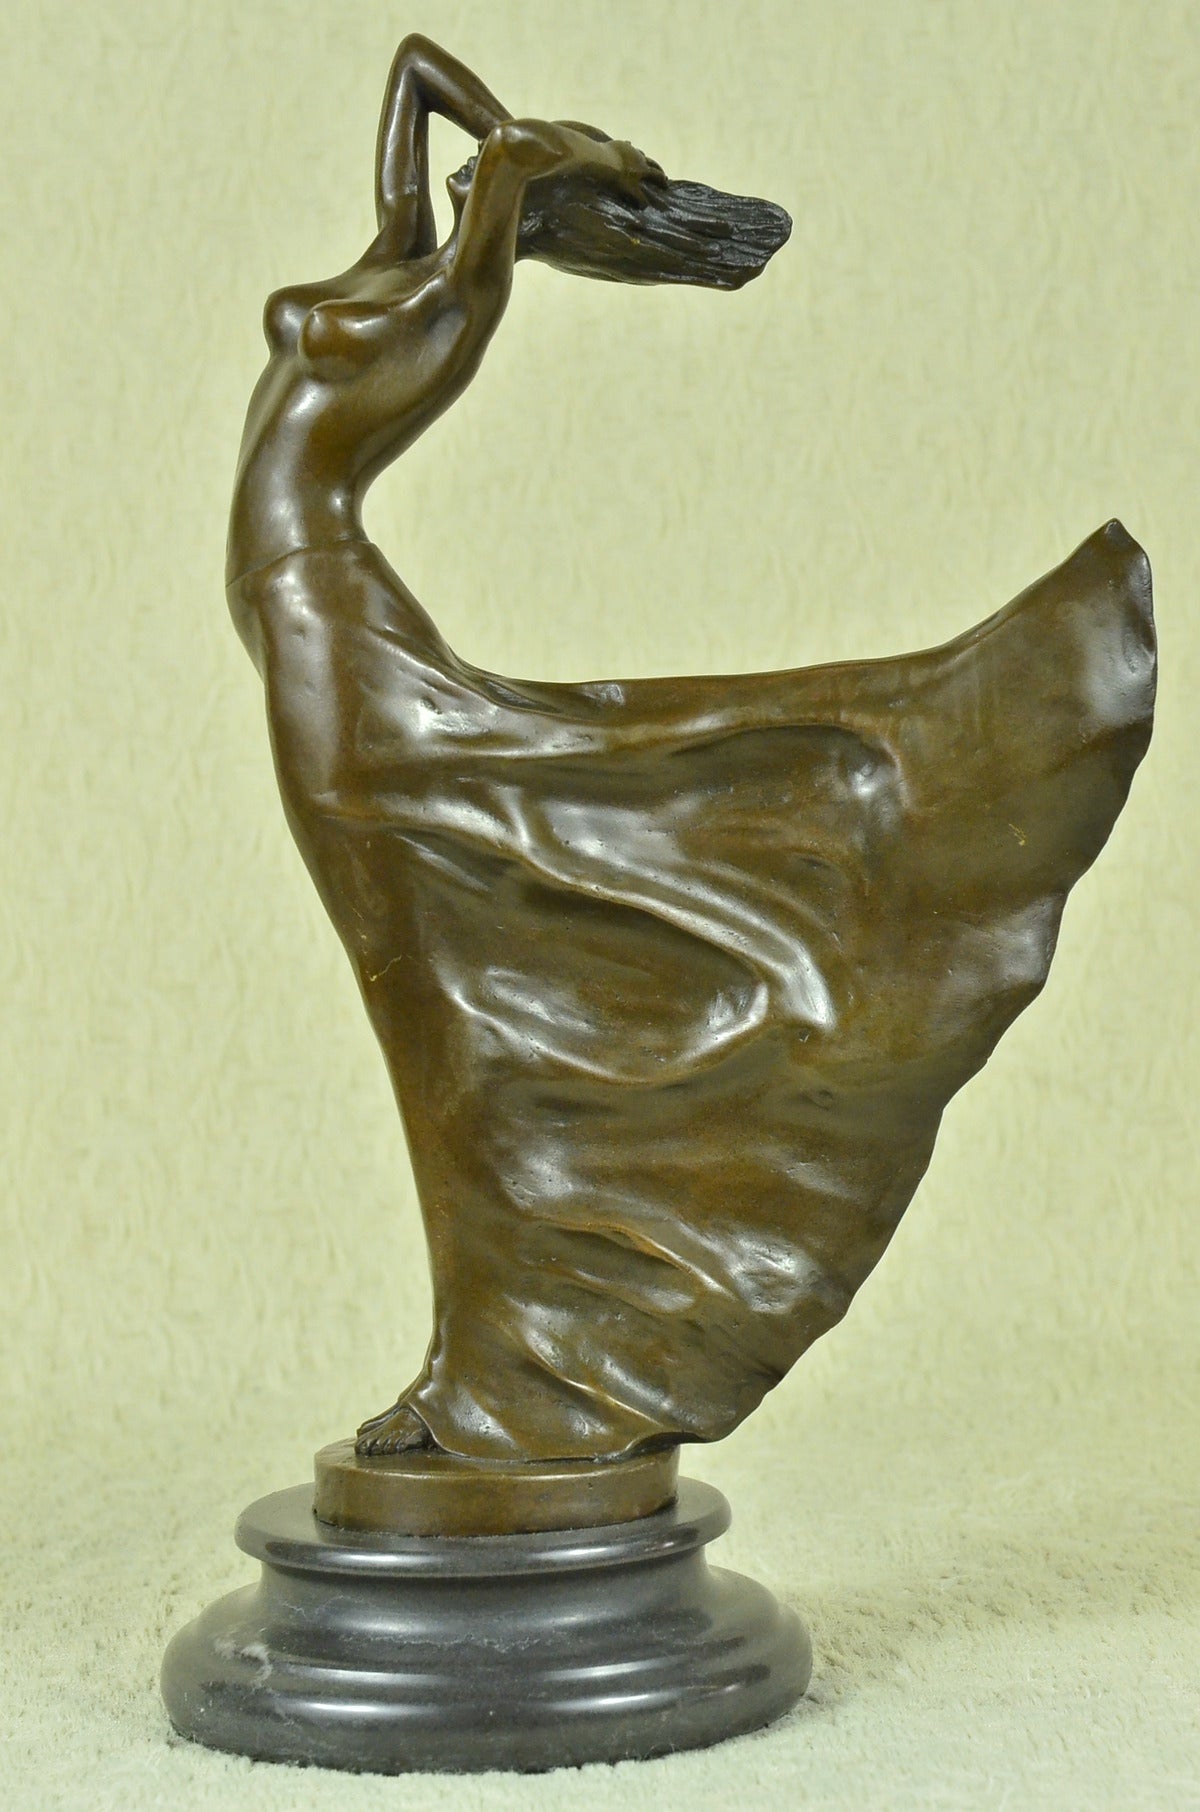 Handcrafted bronze sculpture SALE Deco Art Woman Goddess Sea Mermaid Sensual